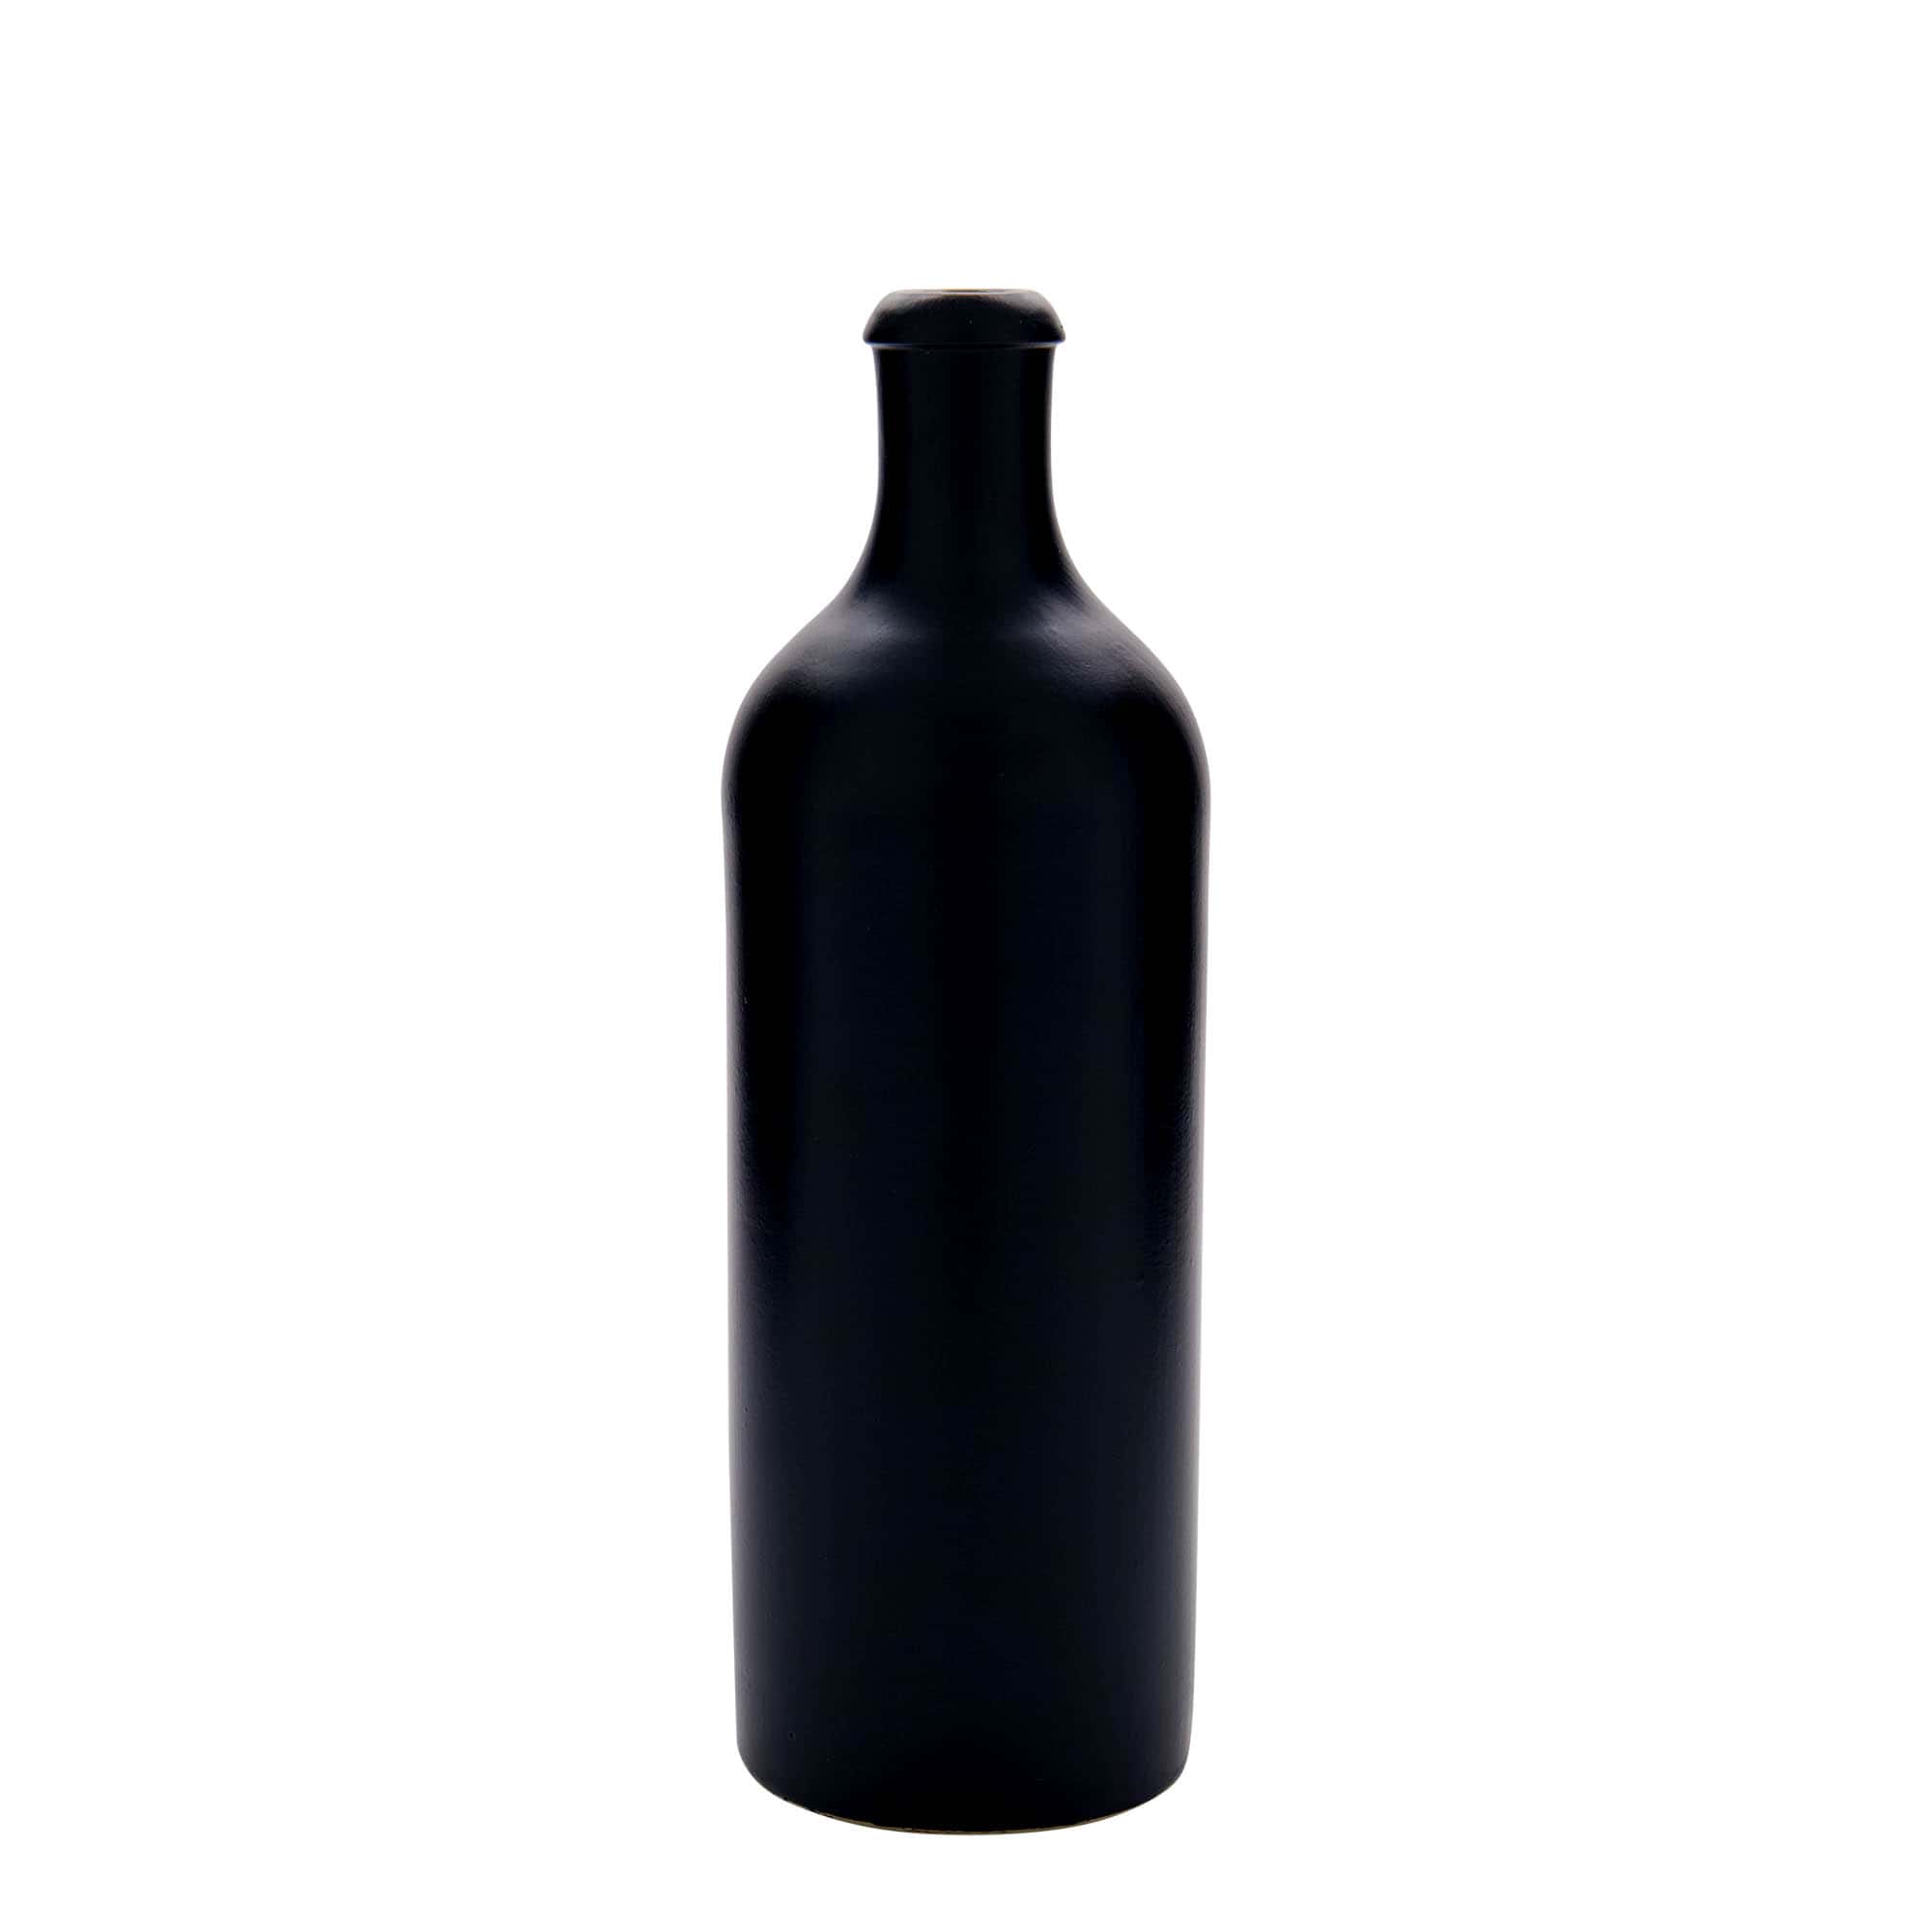 750 ml earthen jug, stoneware, black, closure: cork